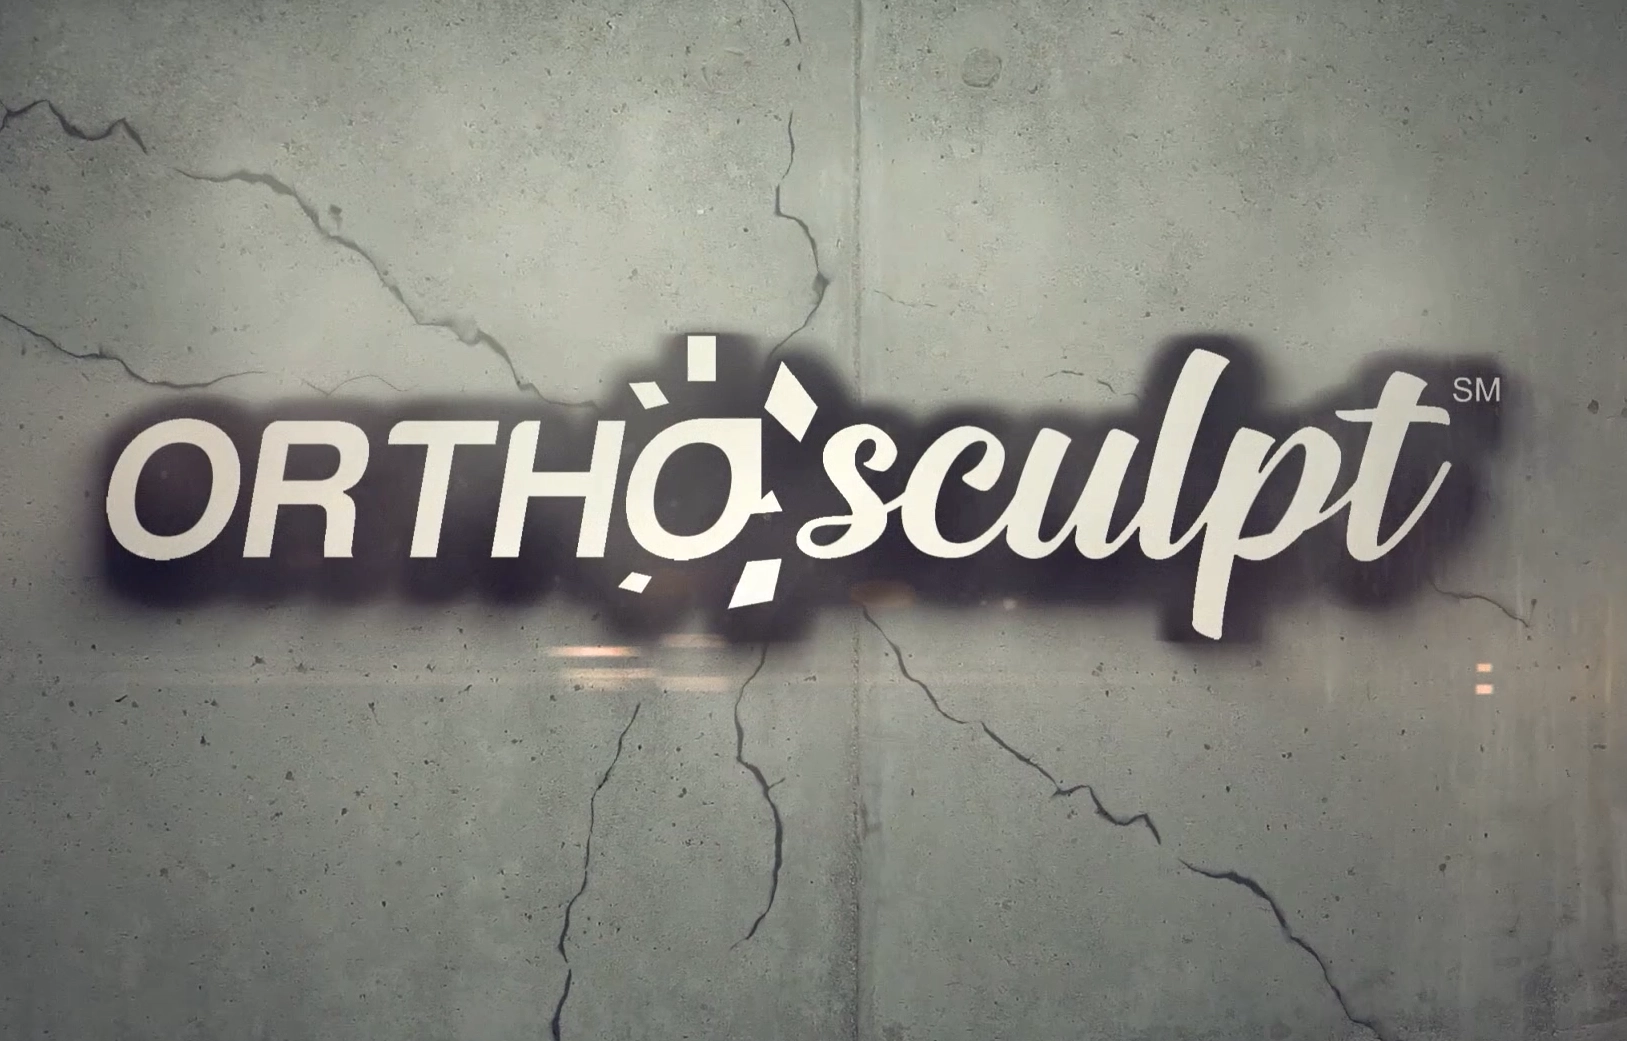 Dr Steven Cyr Introduces “OrthoSculpt”!